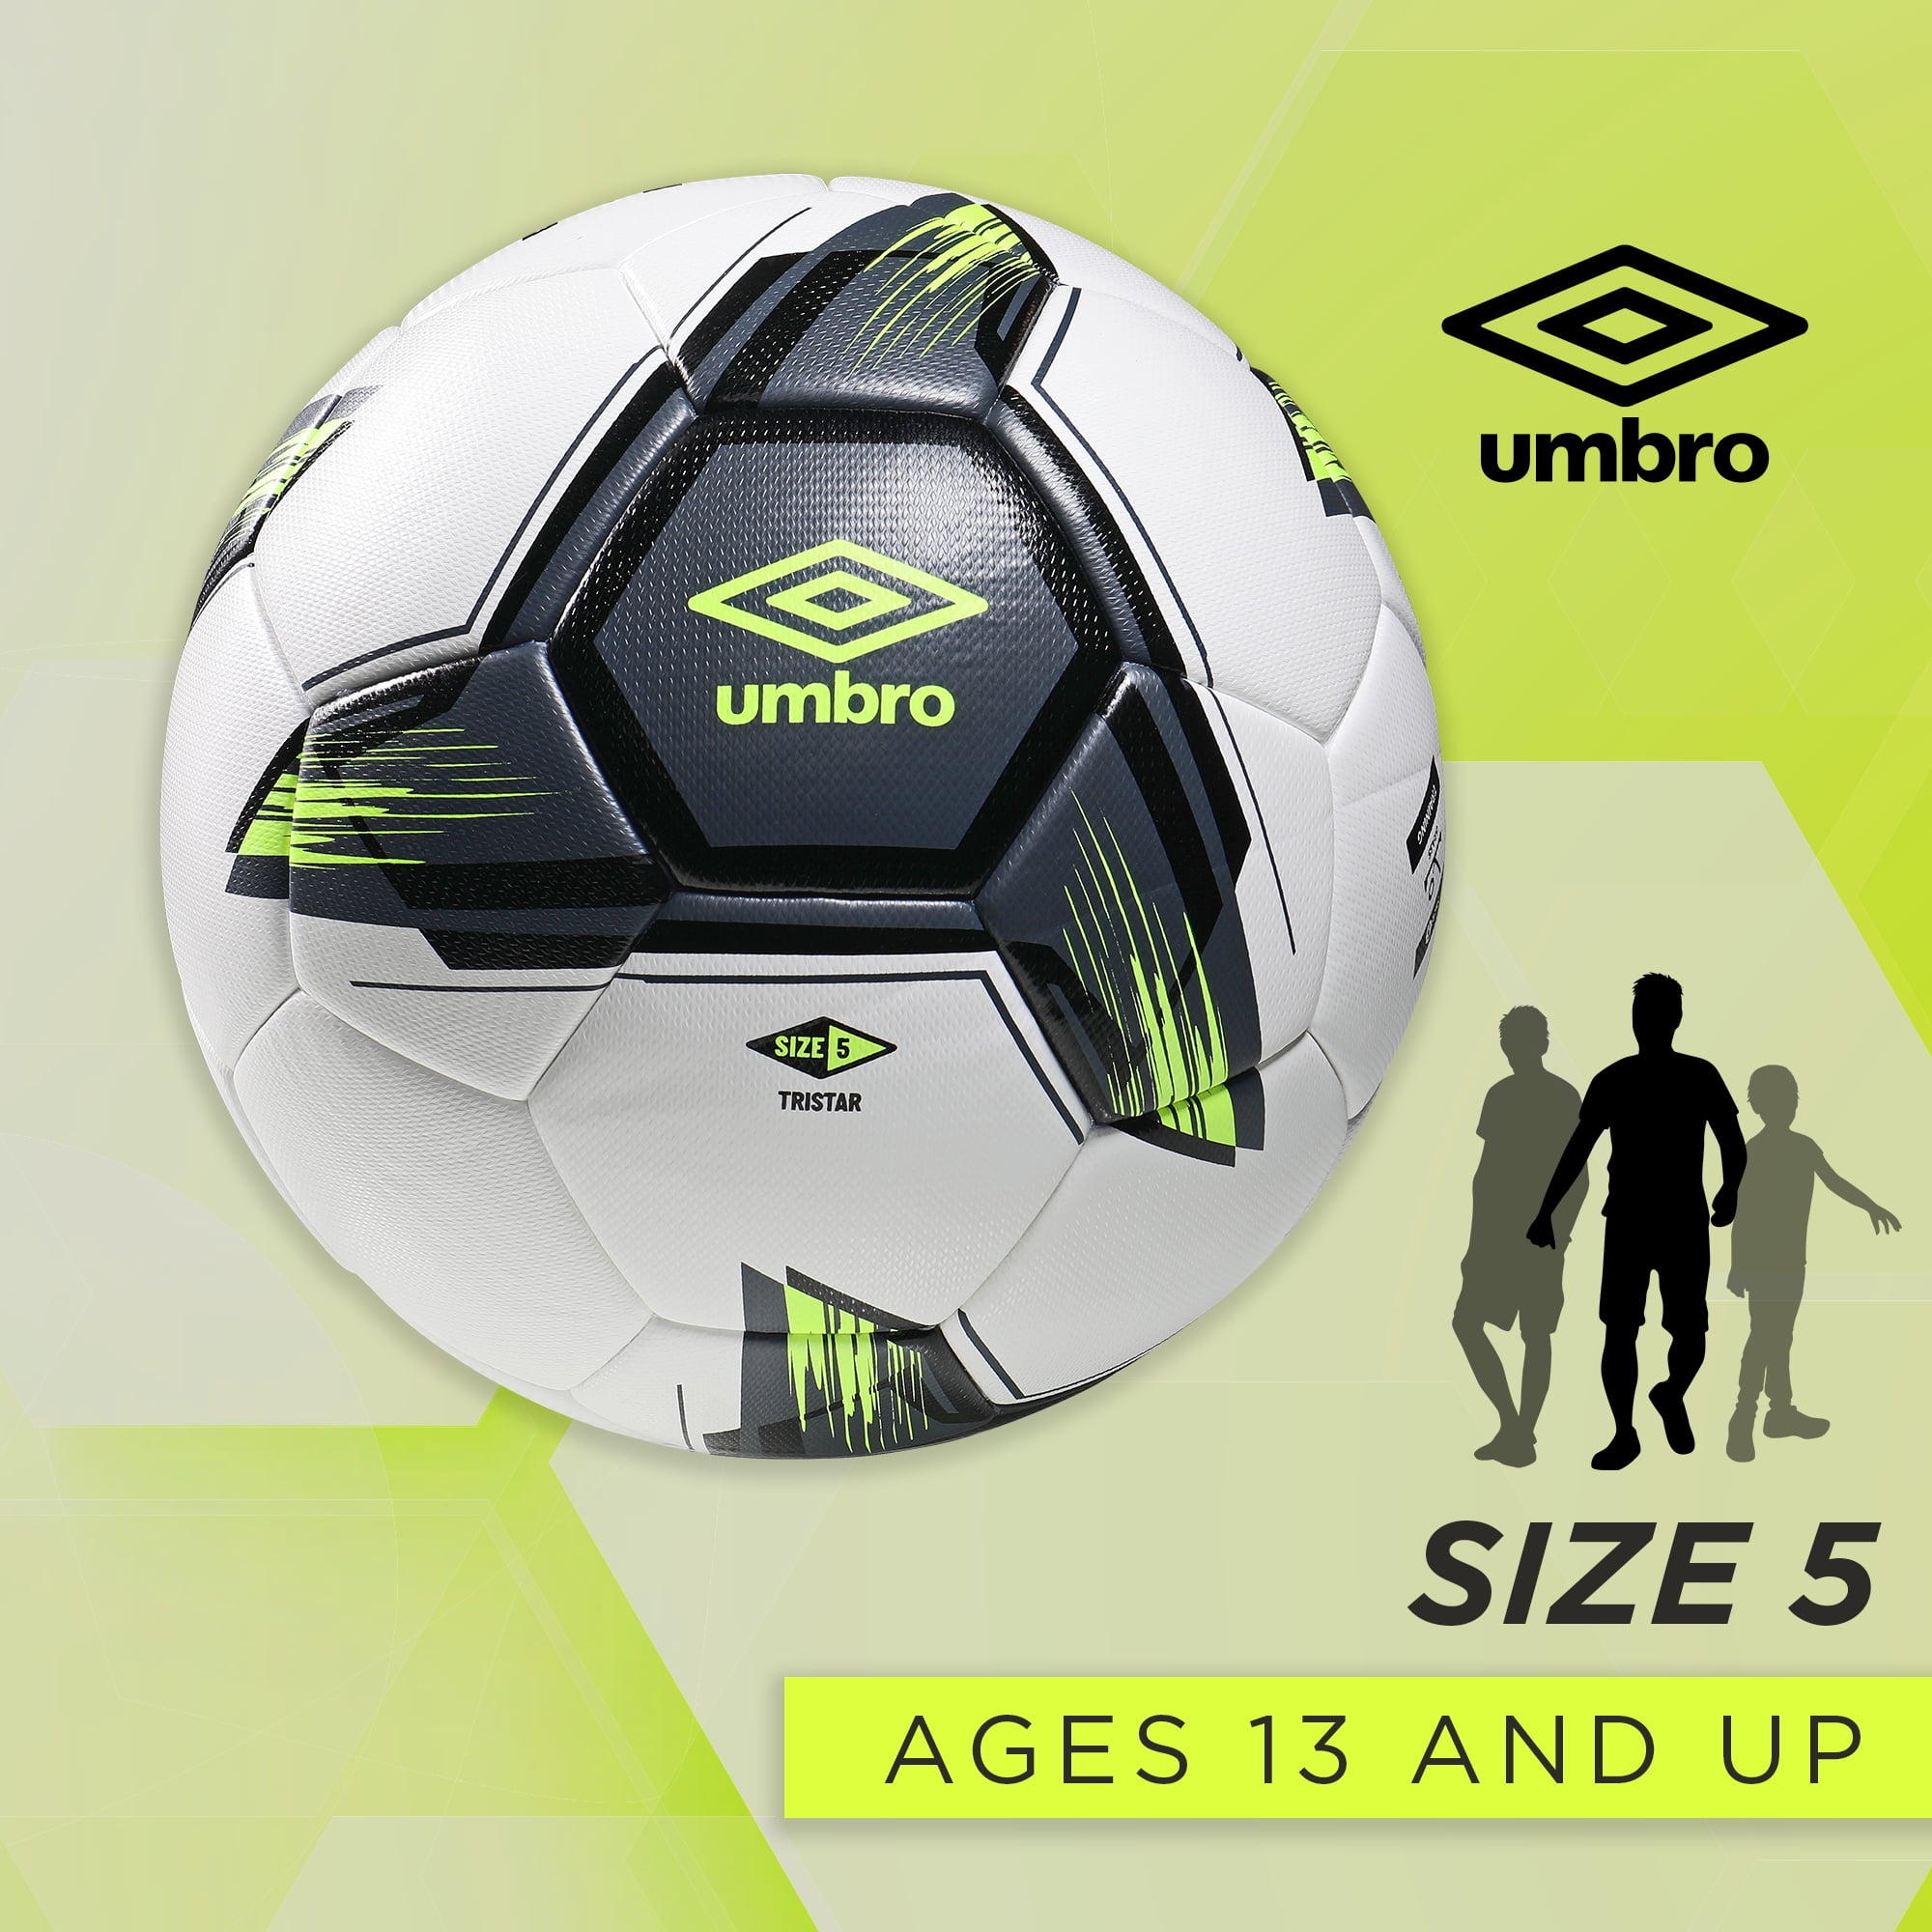 Derbystar Football Soccer Hyper Pro TT Training Ball Size 5 IMS Approved Durable 